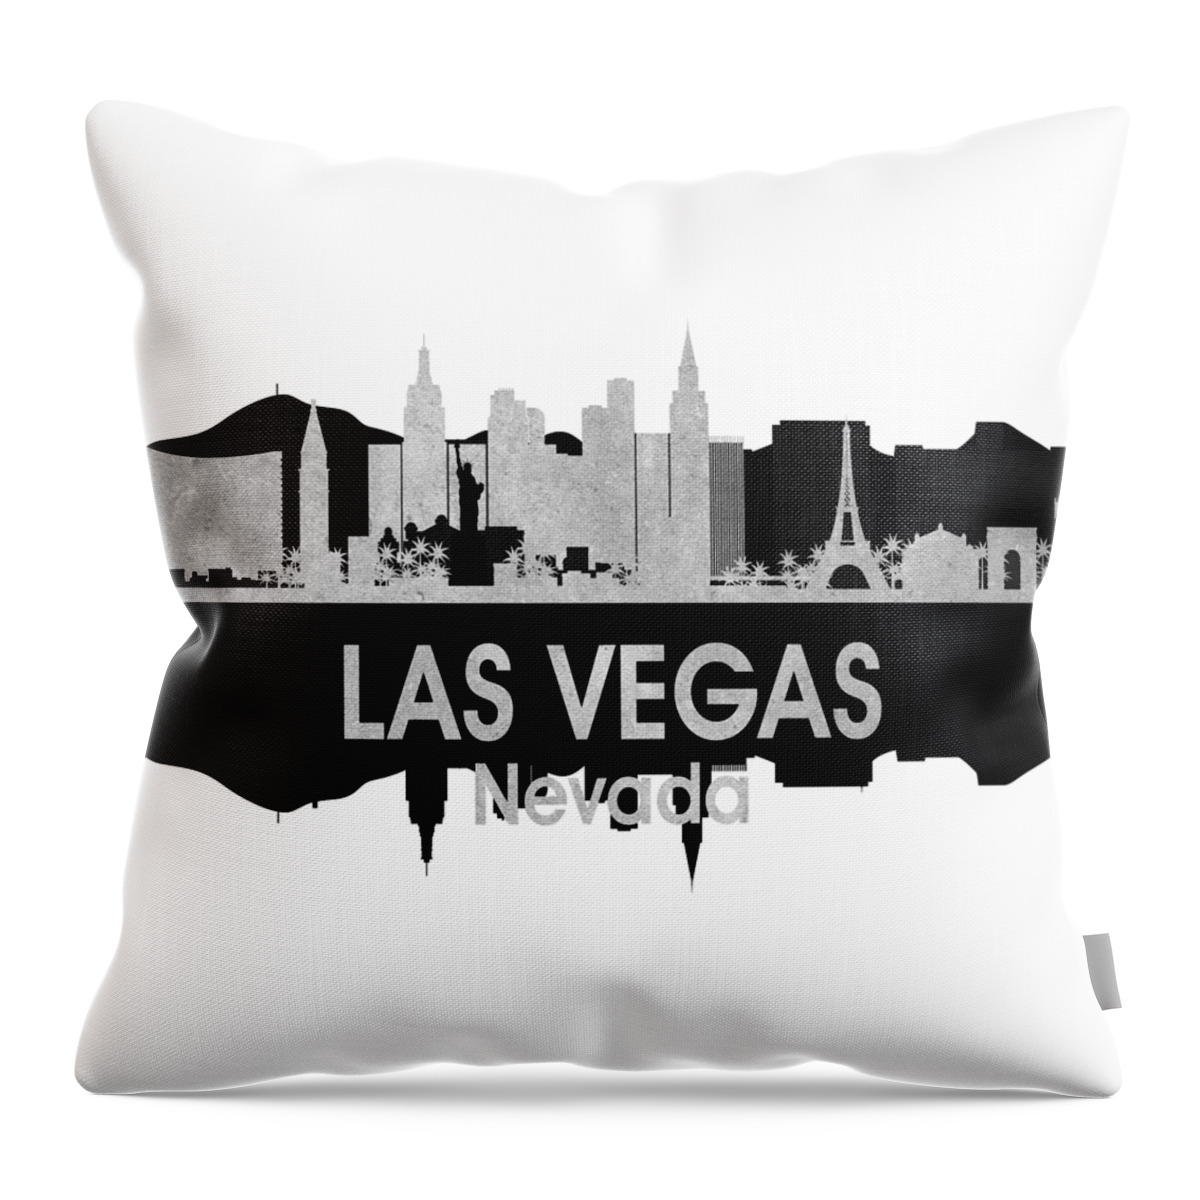 Las Vegas Throw Pillow featuring the digital art Las Vegas NV 4 Squared by Angelina Tamez